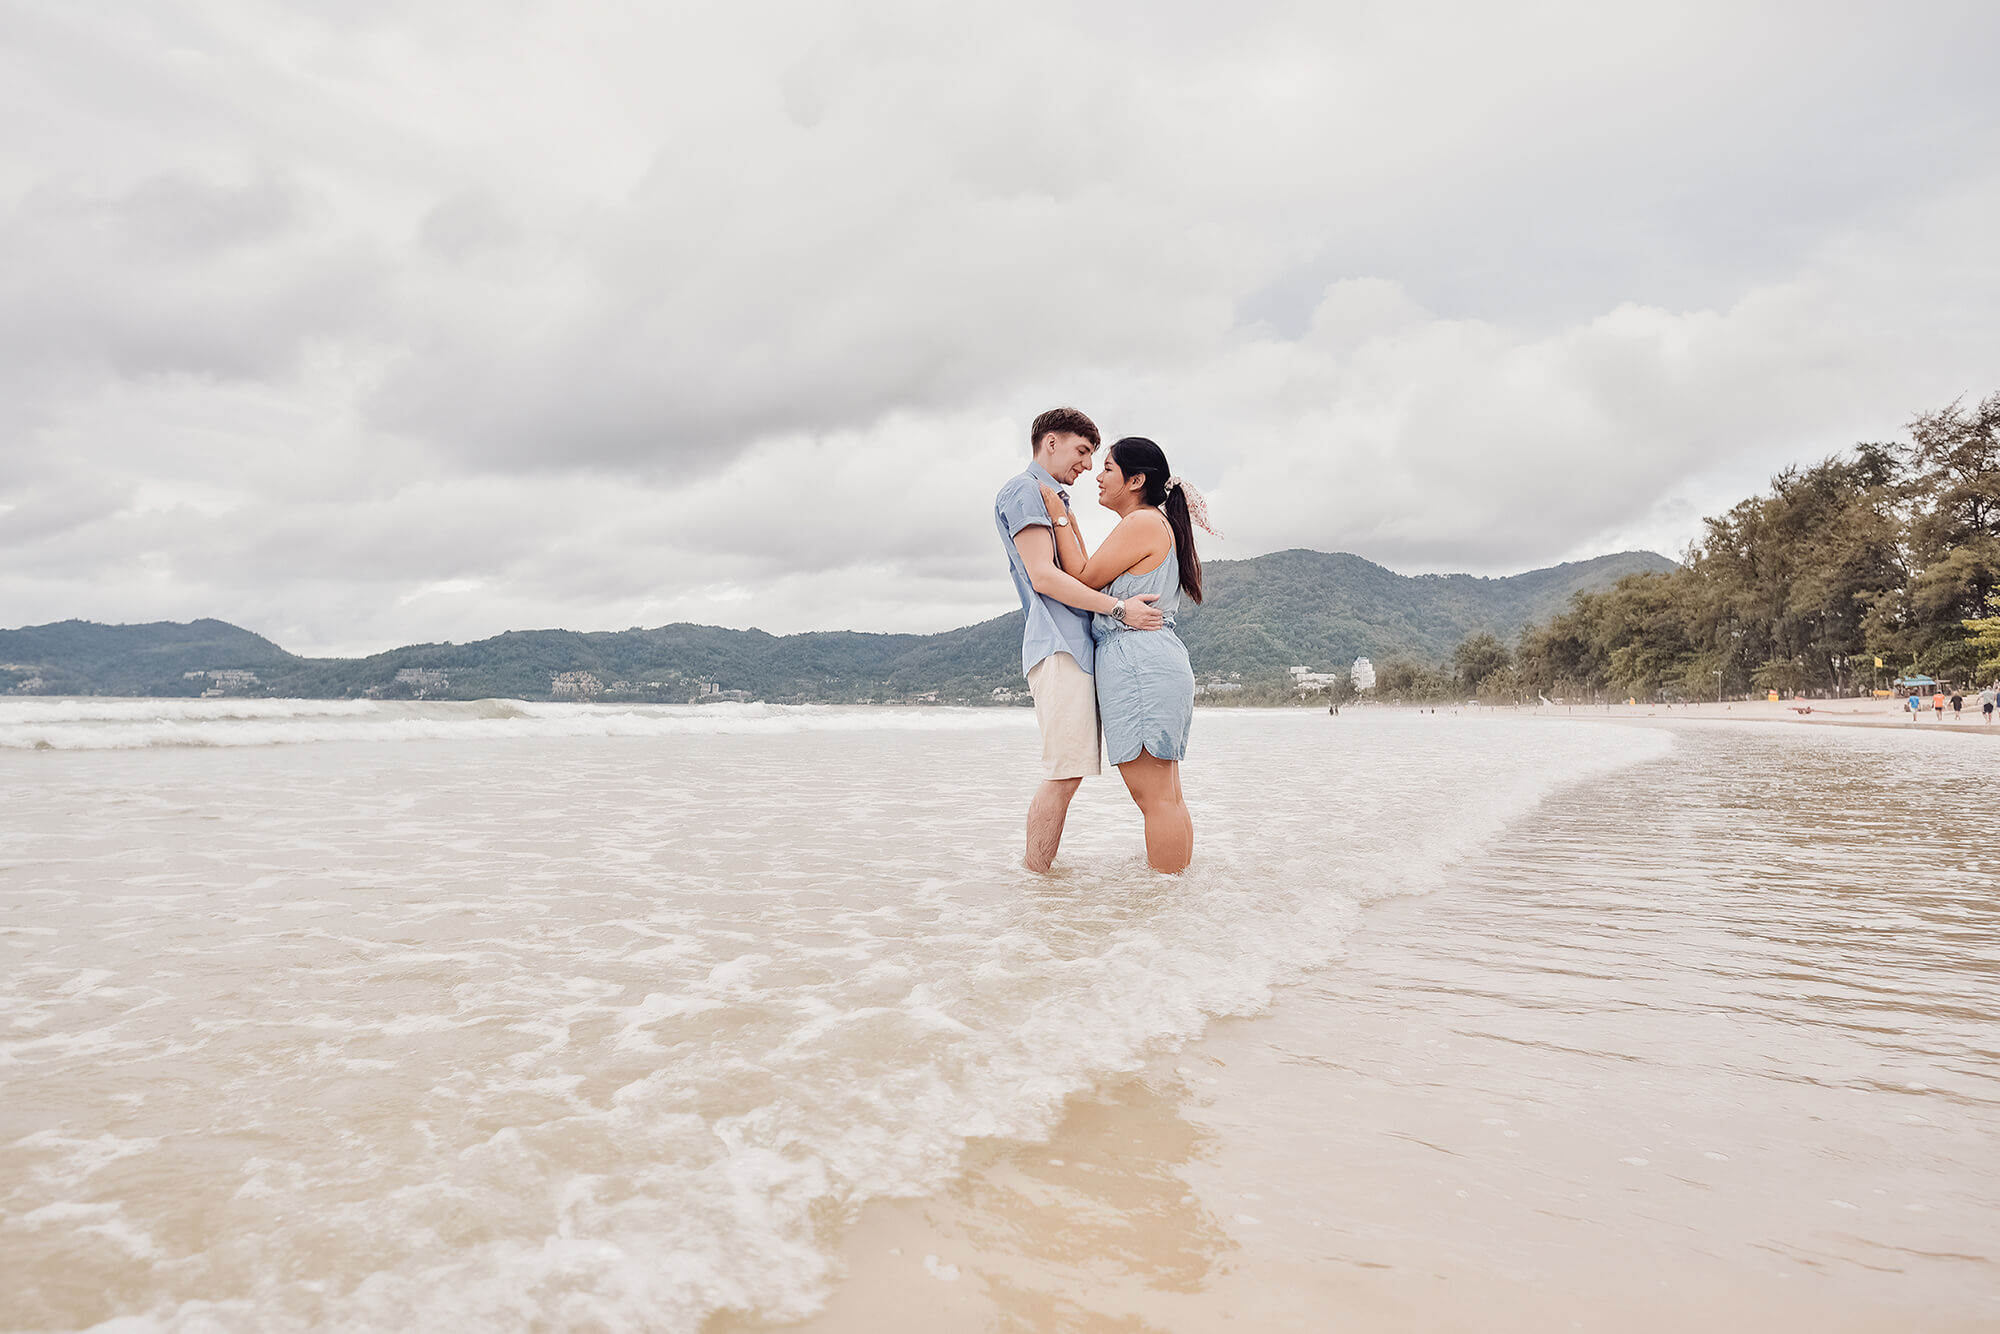 Patong Beach holiday couple photoshoot